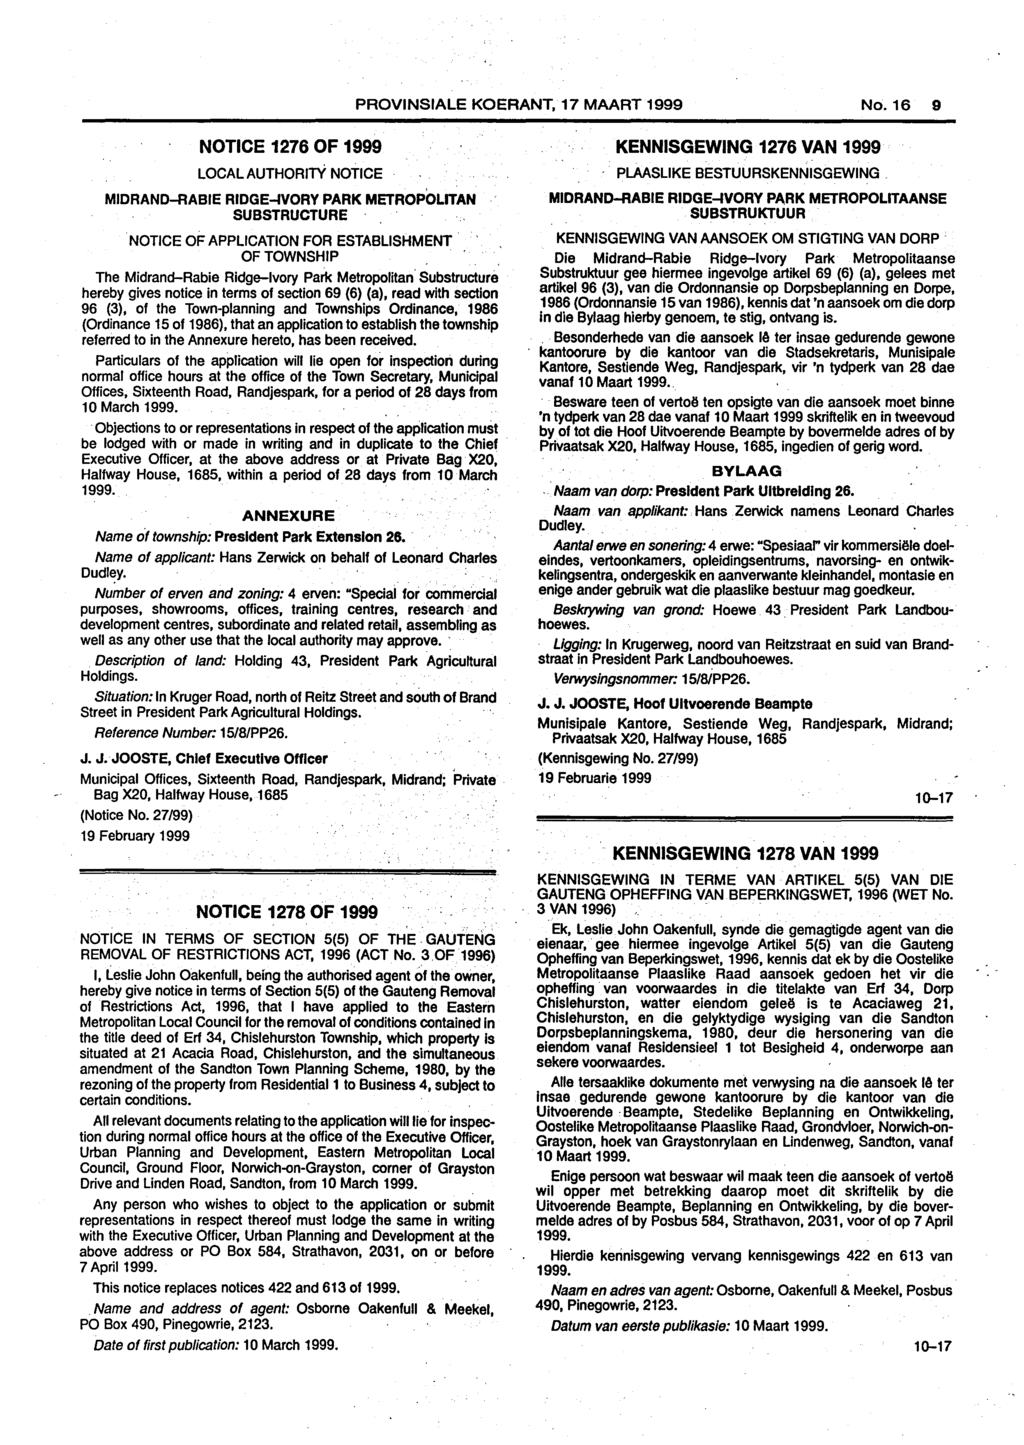 PROVINSIALE KOERANT,17 MAART 1999 No. 16 9 NOTICE 1276 OF 1999 LOCAL AUTHORITY NOTICE MIDRAND-RABIE RIDGE-IVORY PARK METROPOLITAN SUBSTRUCTURE.